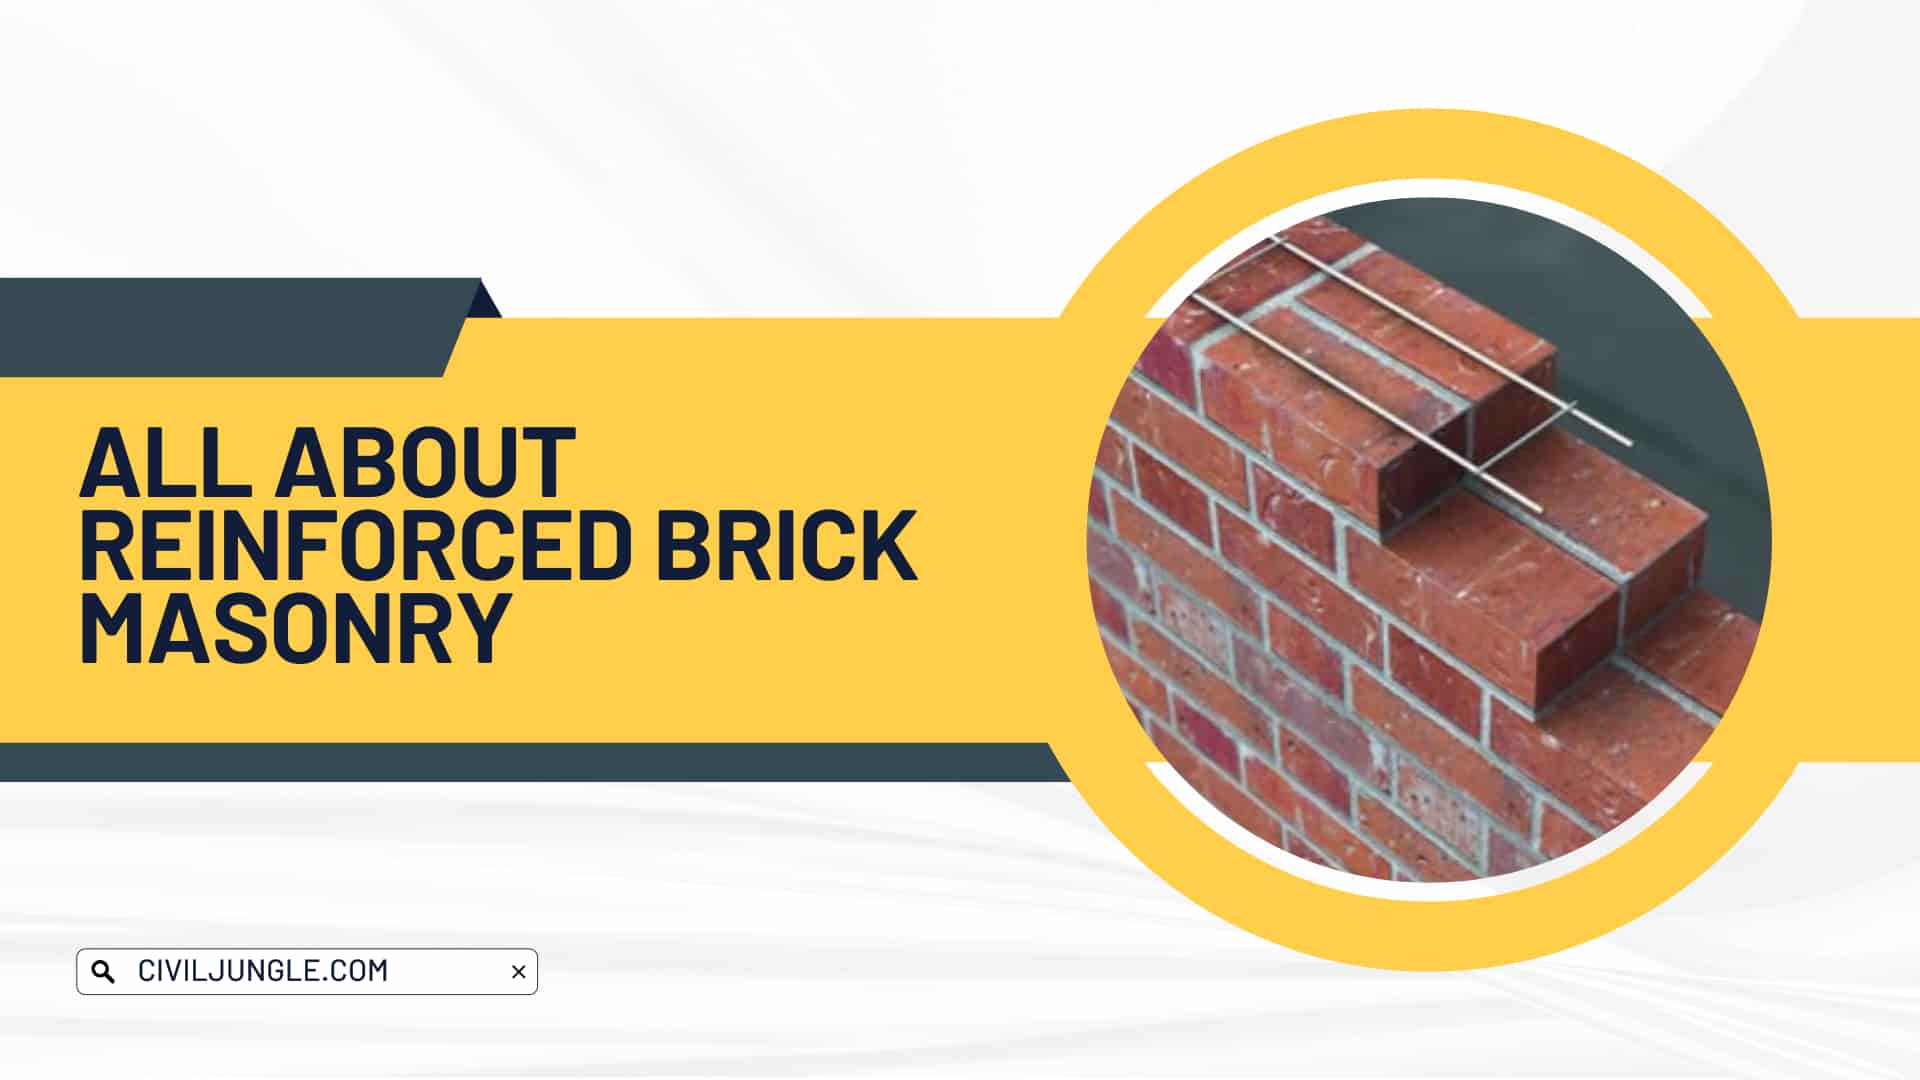 All About Reinforced Brick Masonry